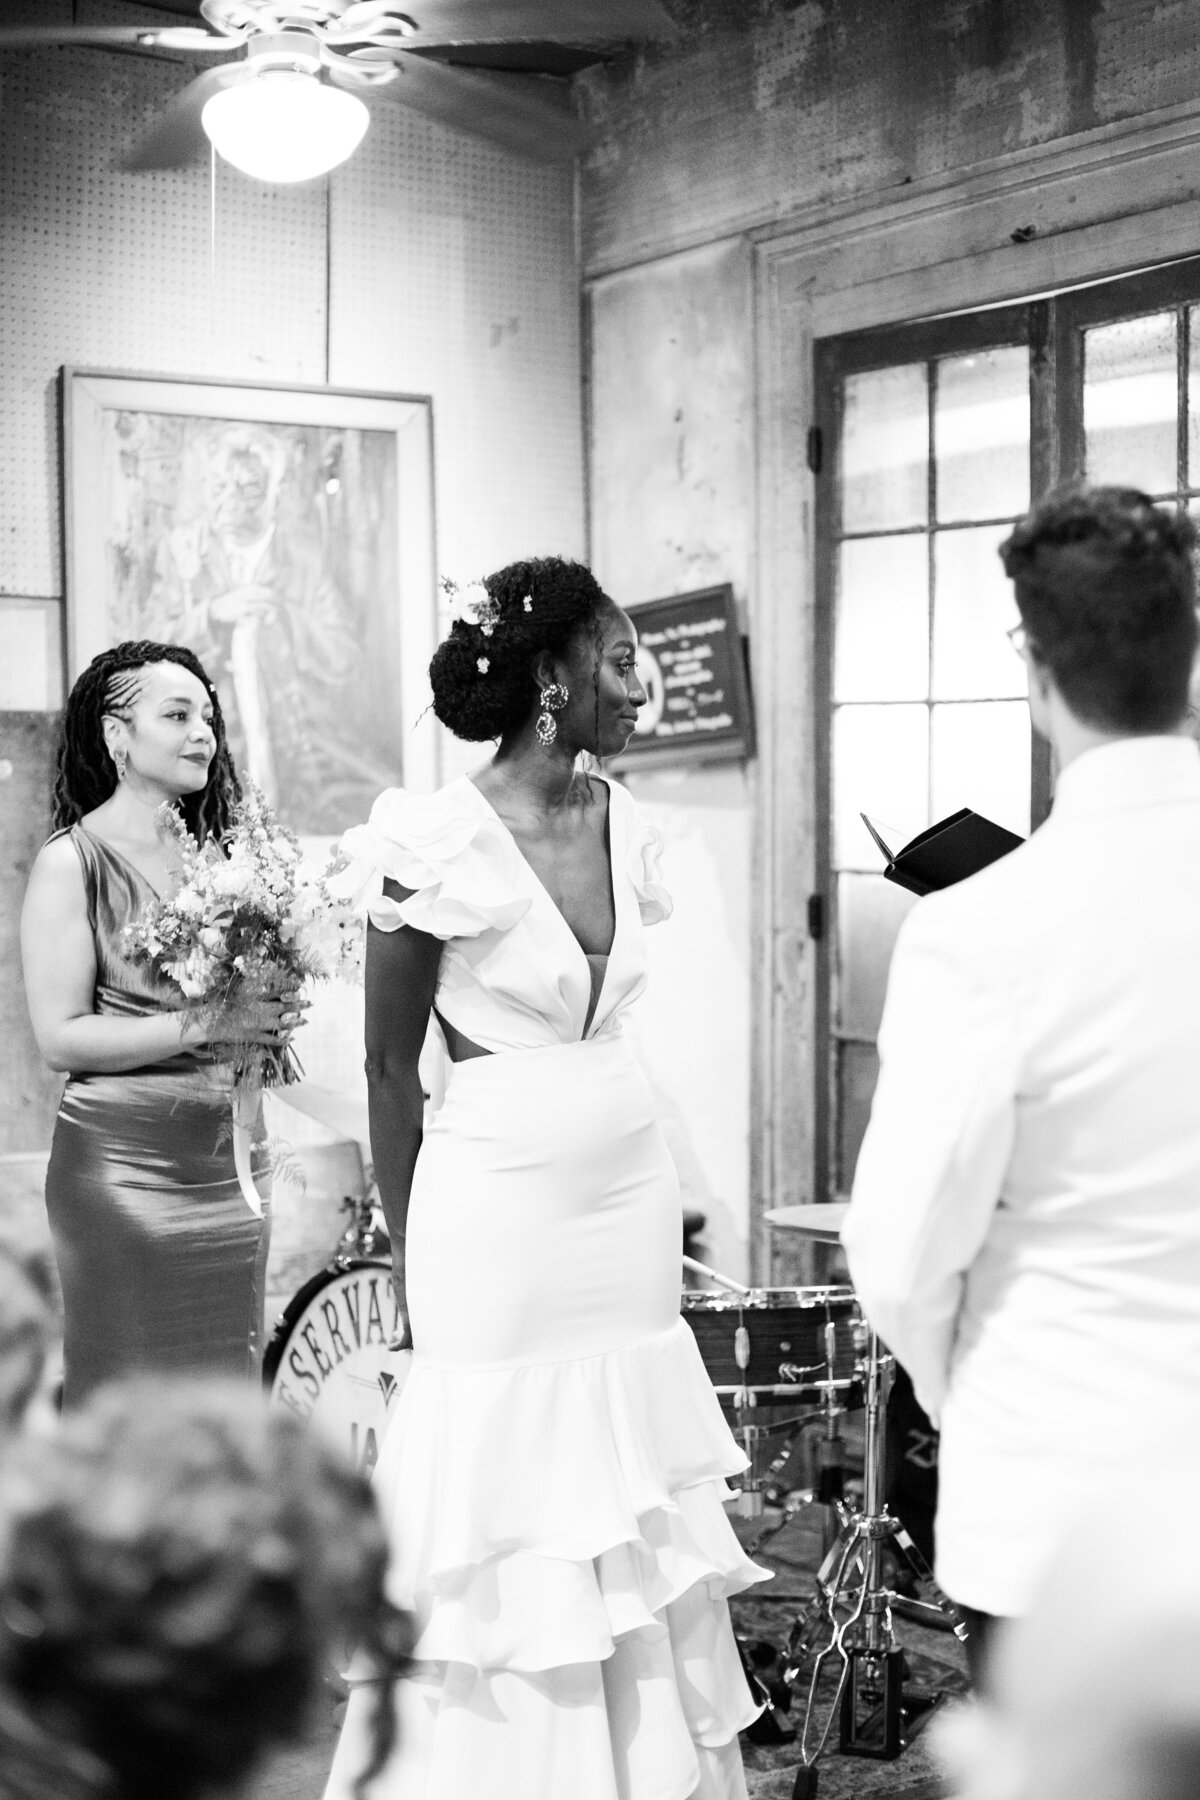 Michelle Norwood Events | NOLA Weddings + Destination Weddings Worldwide - New Orleans Wedding - Bridgette Saul - Featured in Vogue Weddings